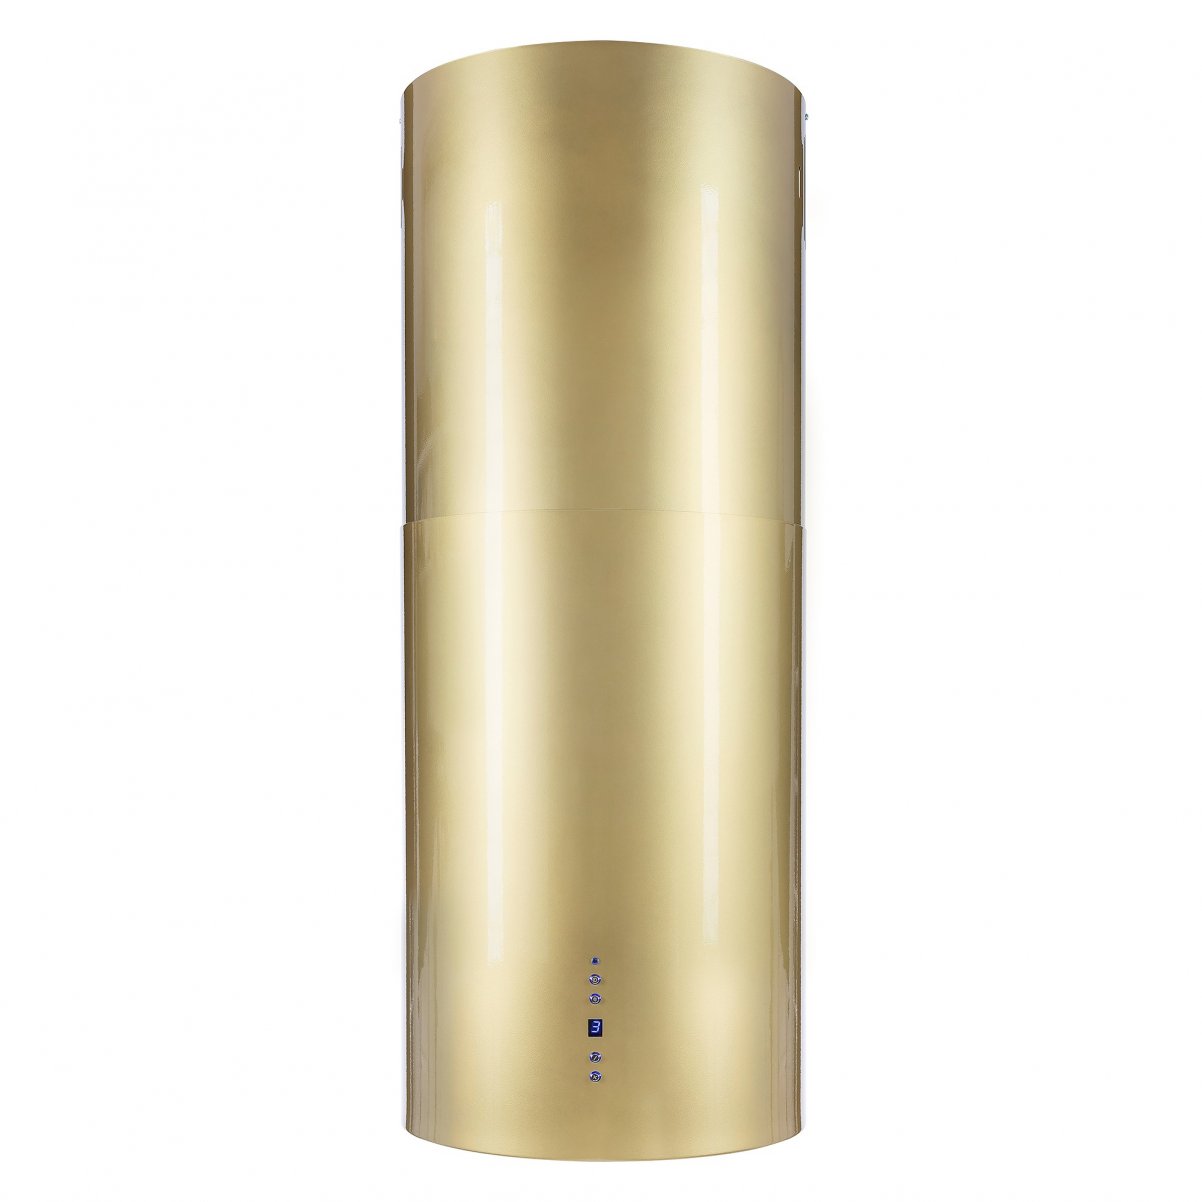 Design frihängande cylinderformad köksfläkt Explorer guld mässing